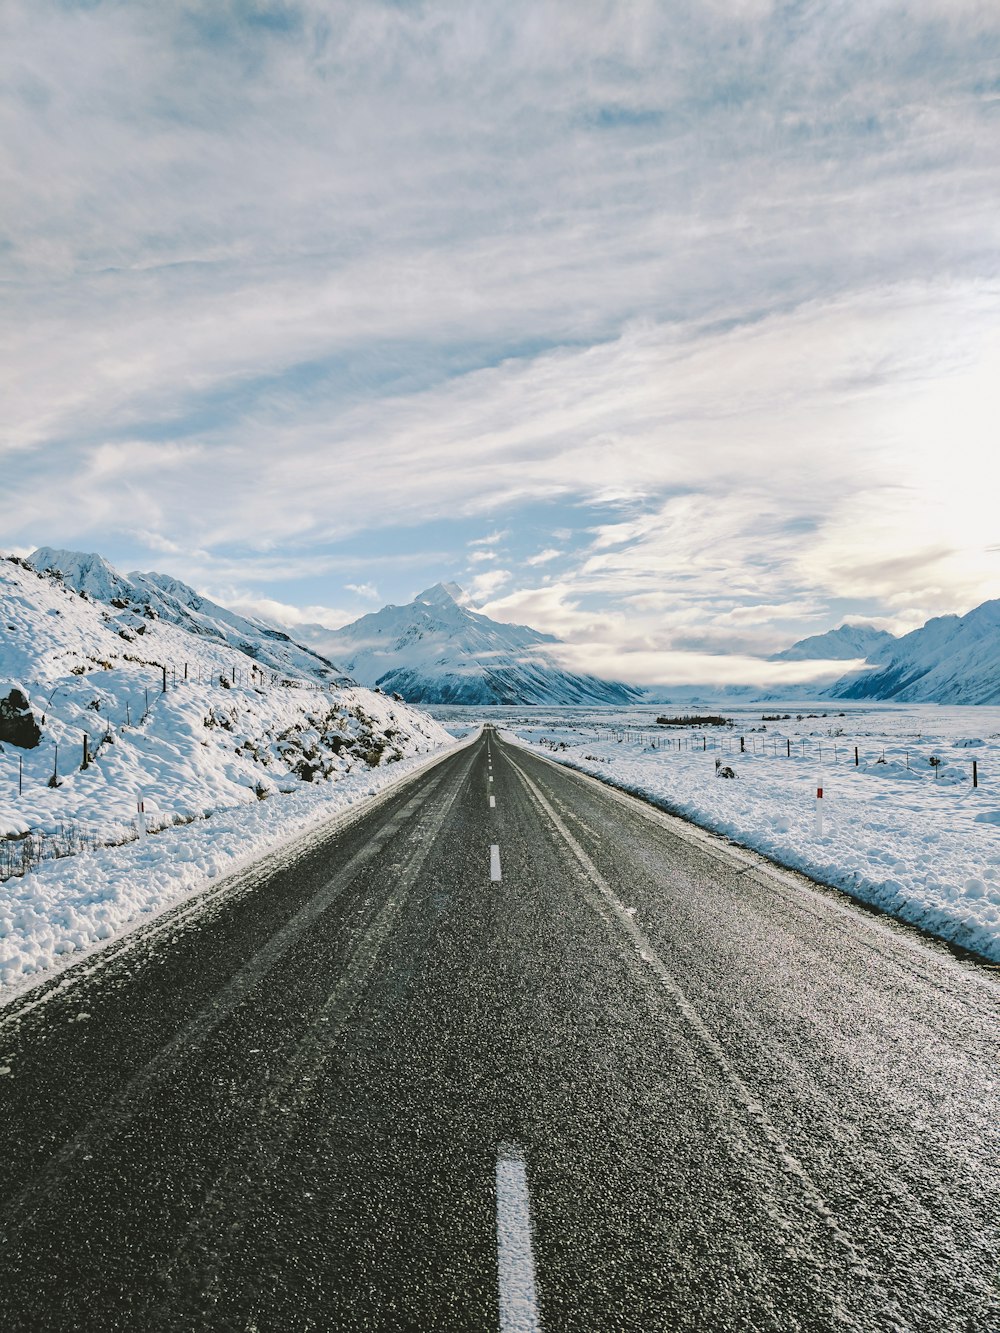 Carretera cerca de la montaña cubierta de nieve